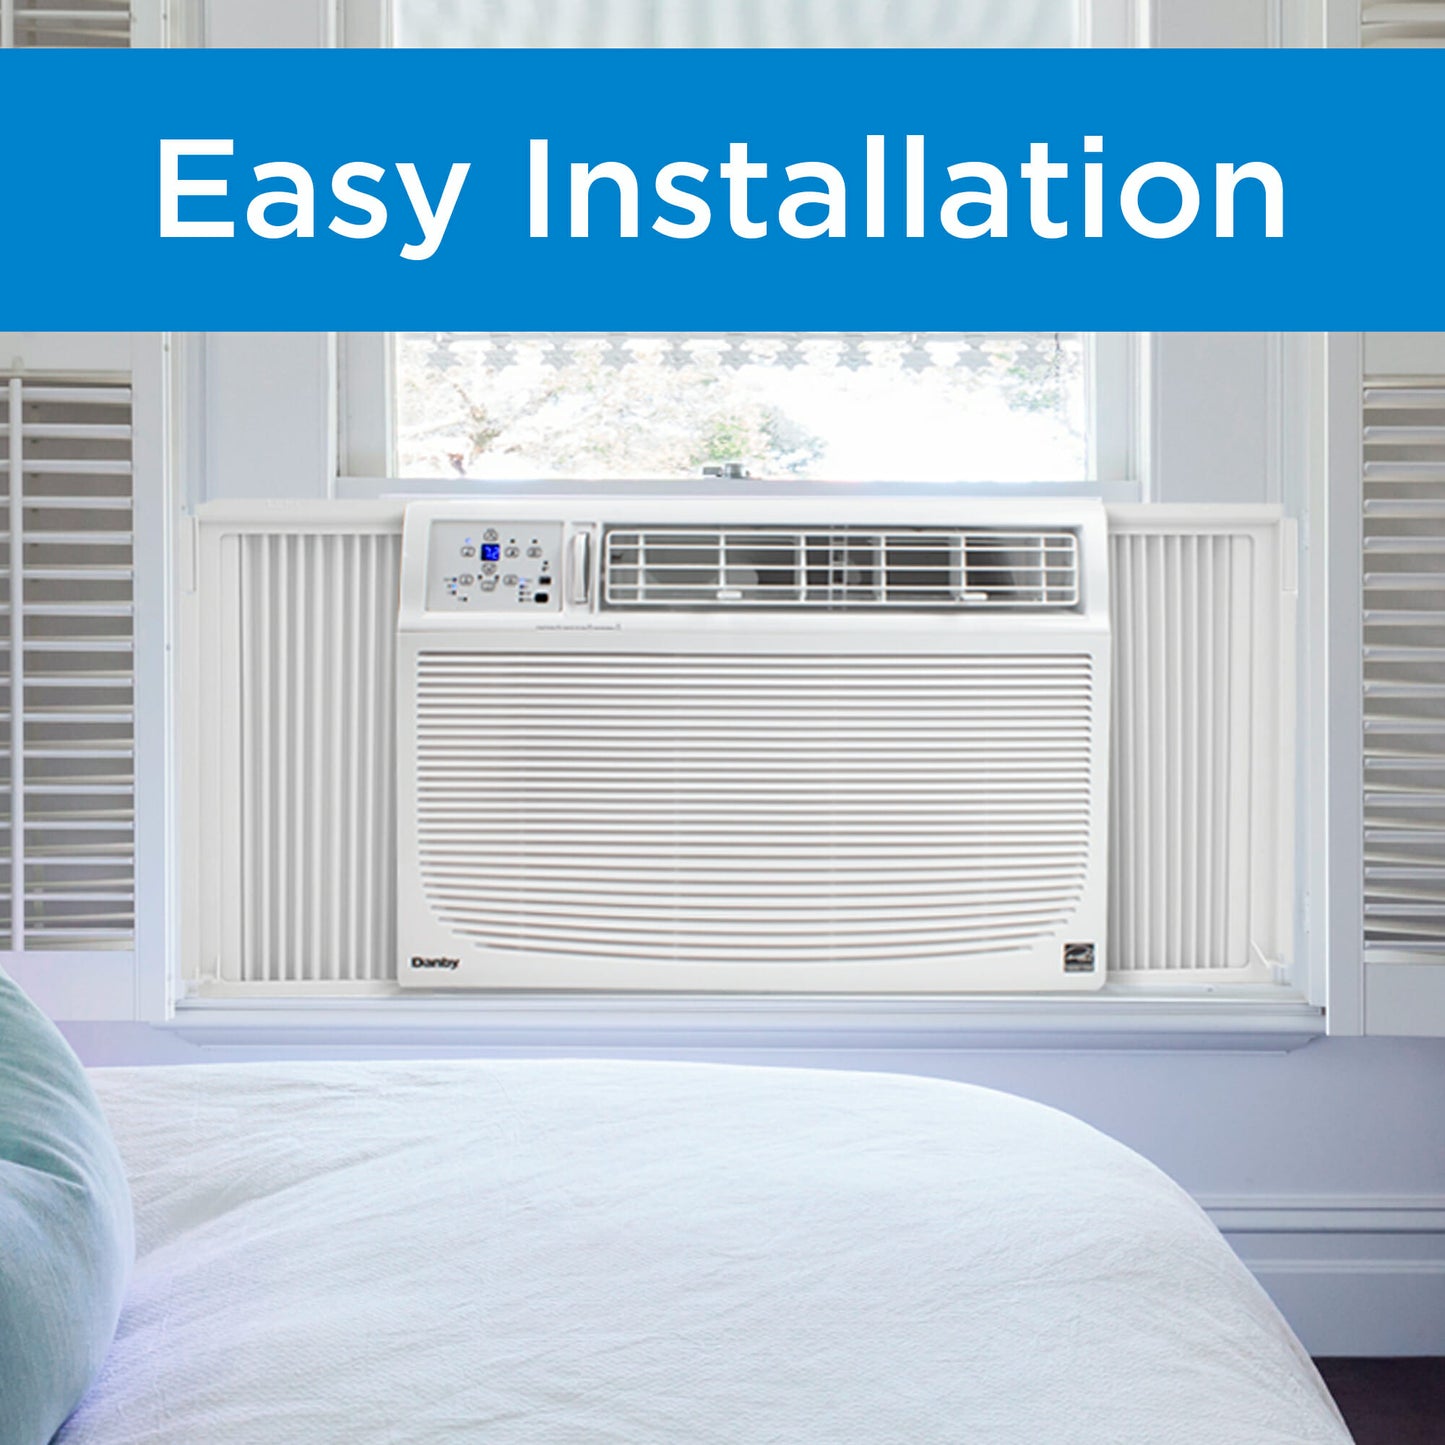 Danby 18,000 BTU Window Air Conditioner - Refurbished*